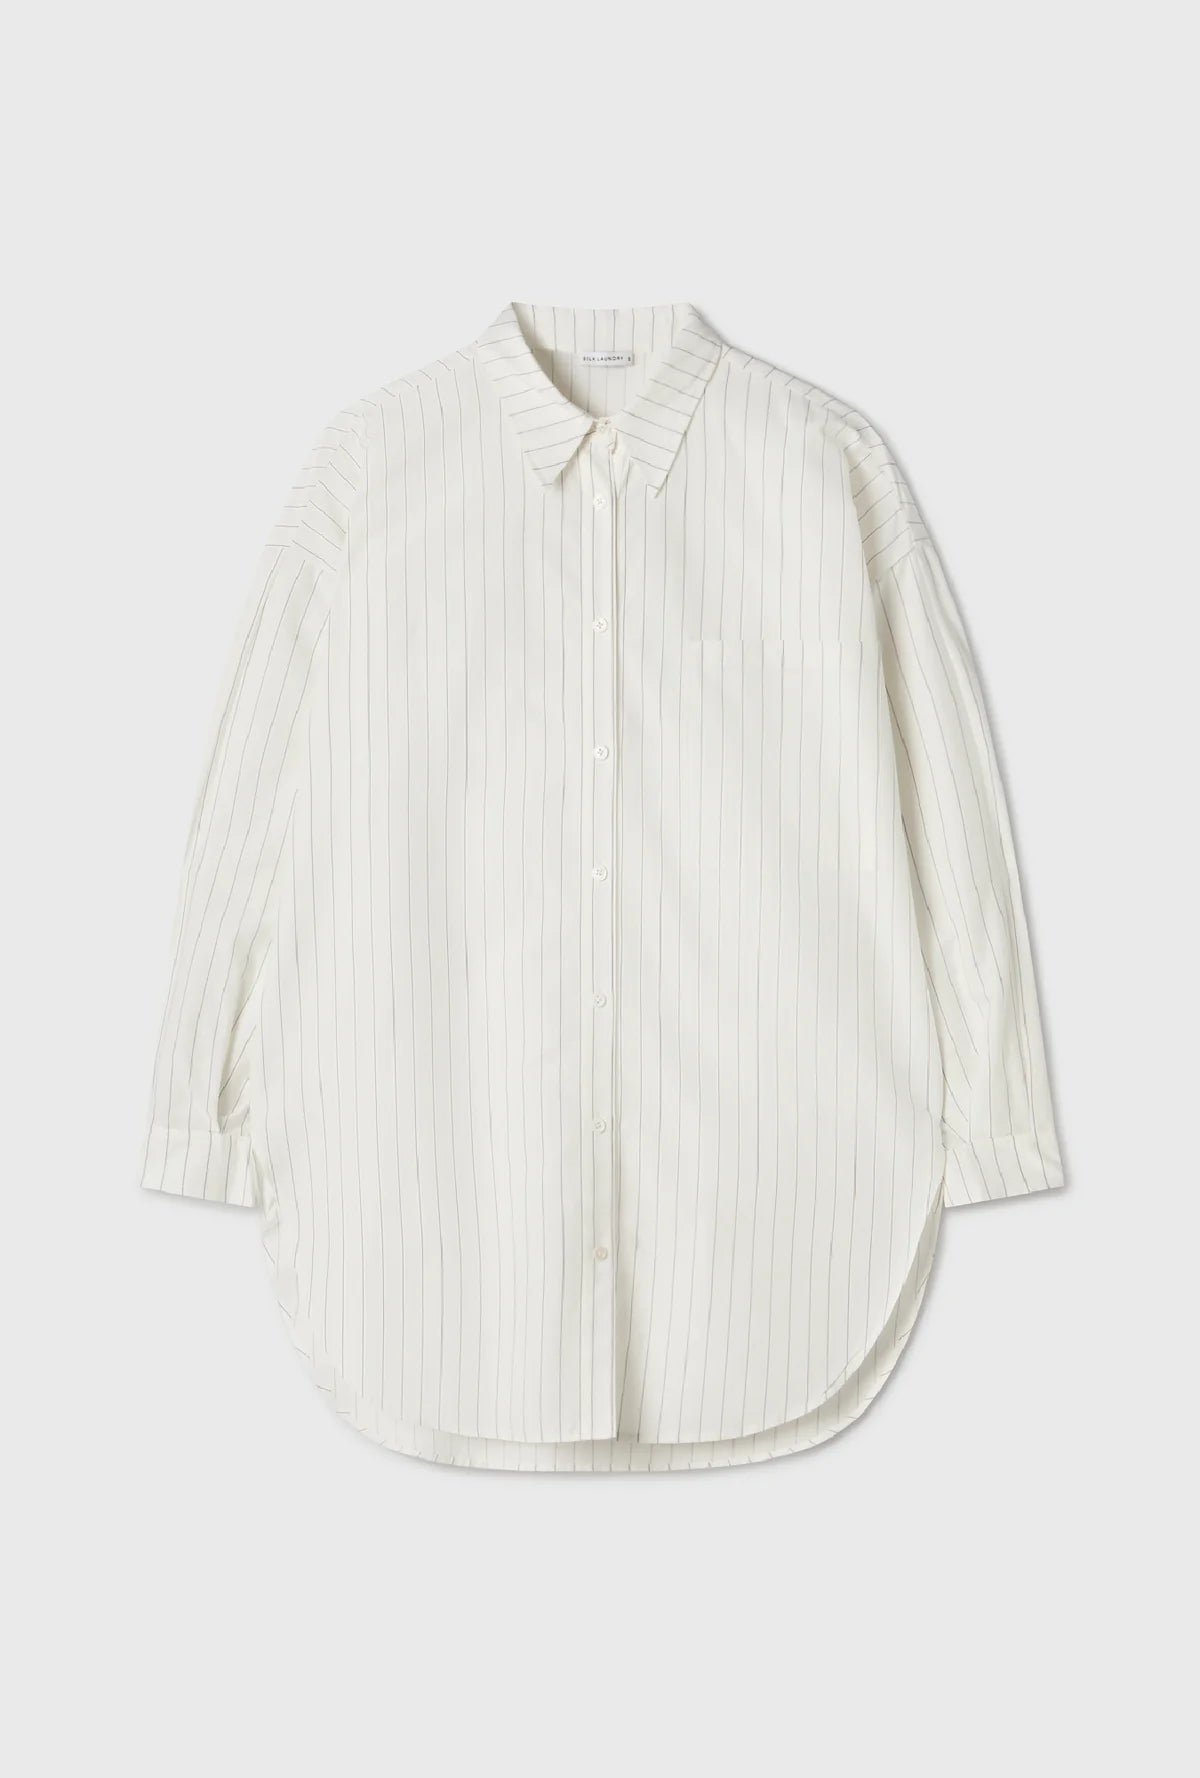 Cotton Silk Round Shirt in White Pinstripe by Silk Laundry